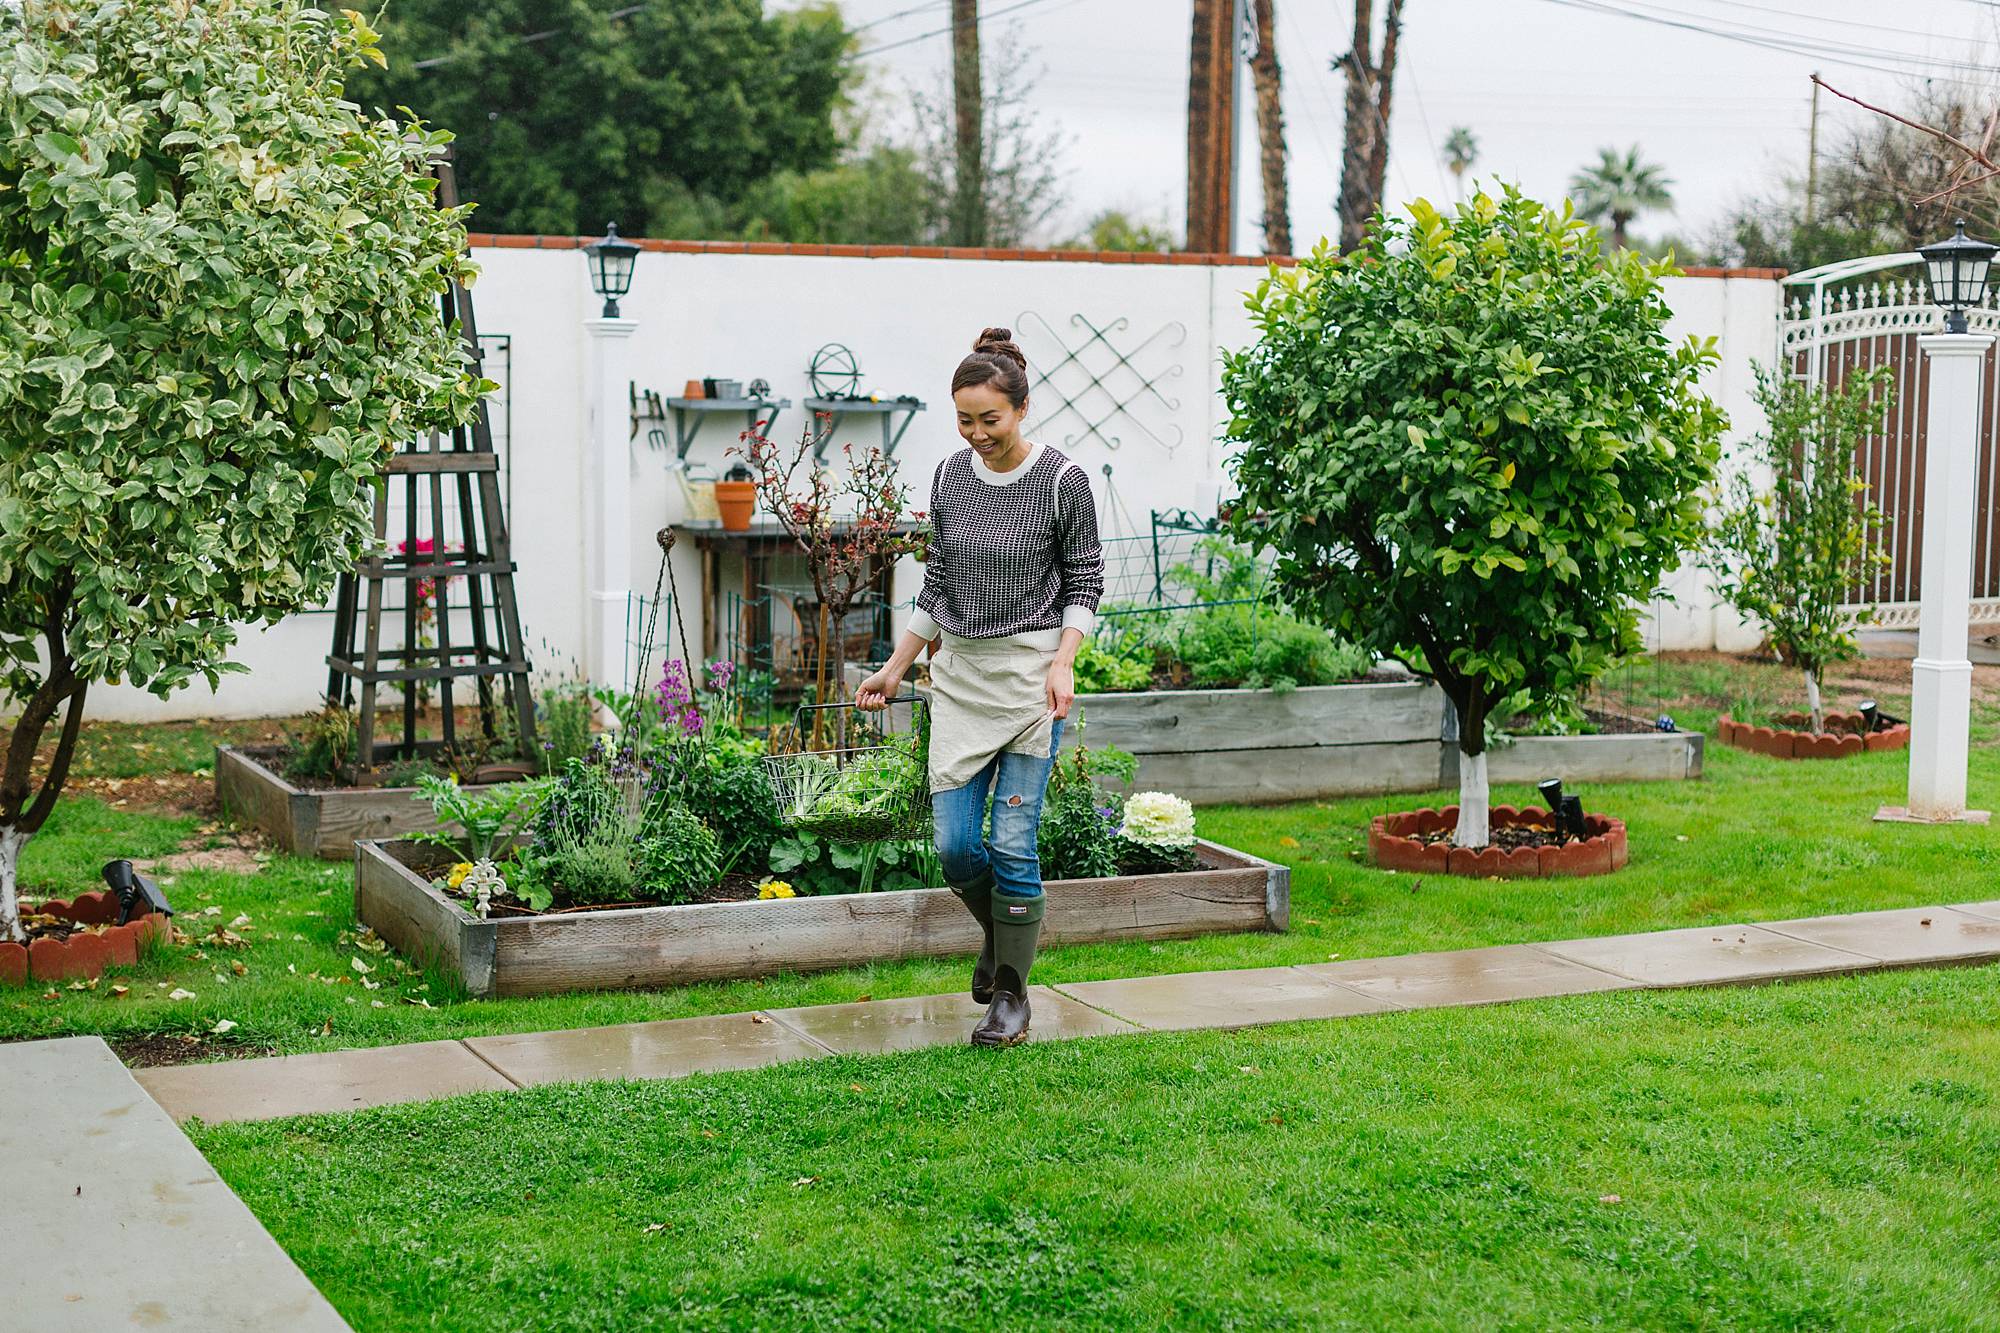 Diana Harvesting Vegetables From Her Garden